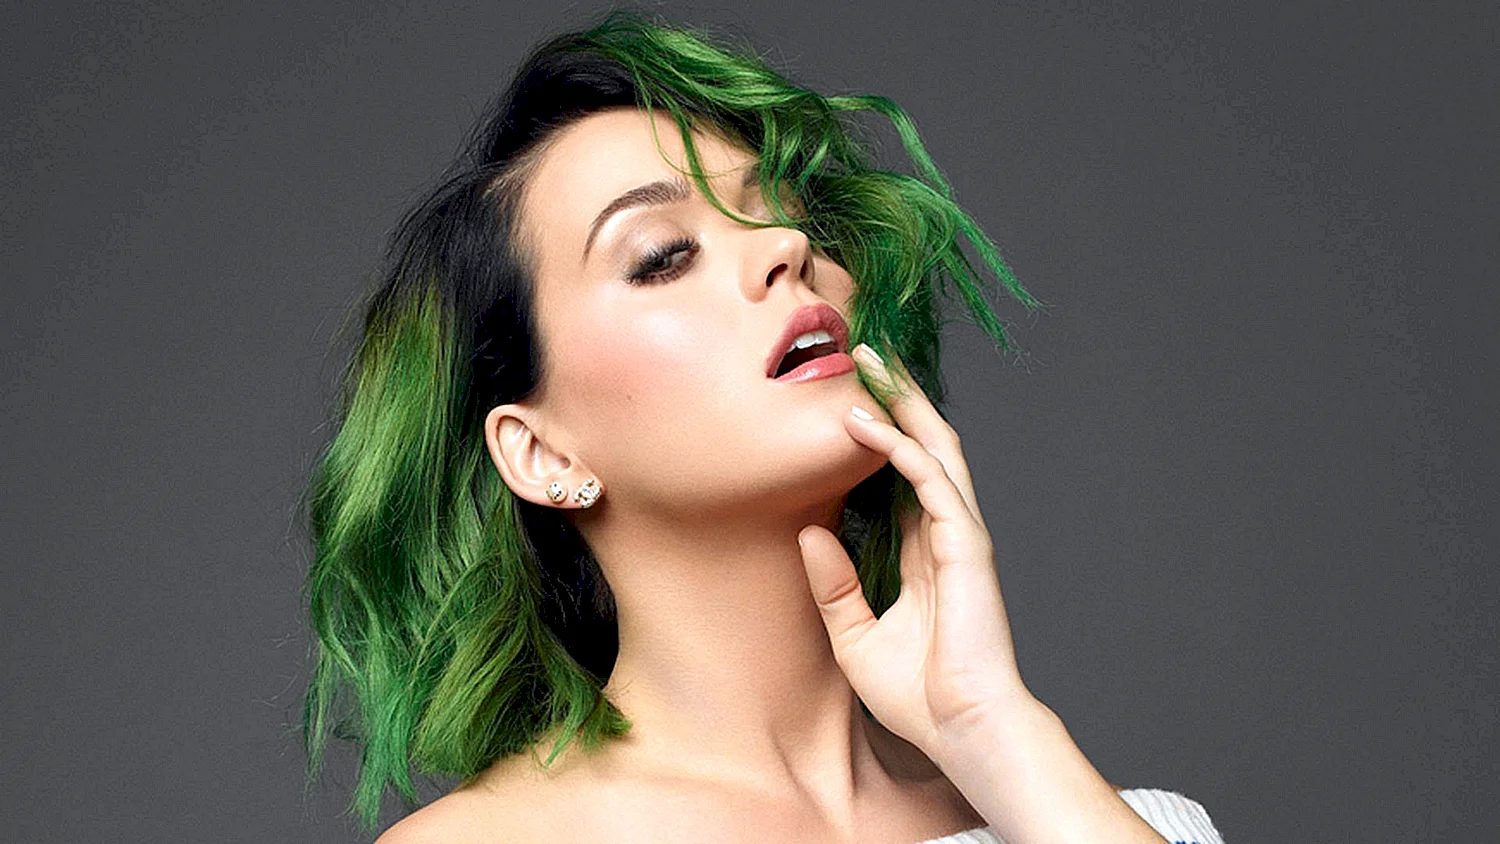 Katy Perry Green hair